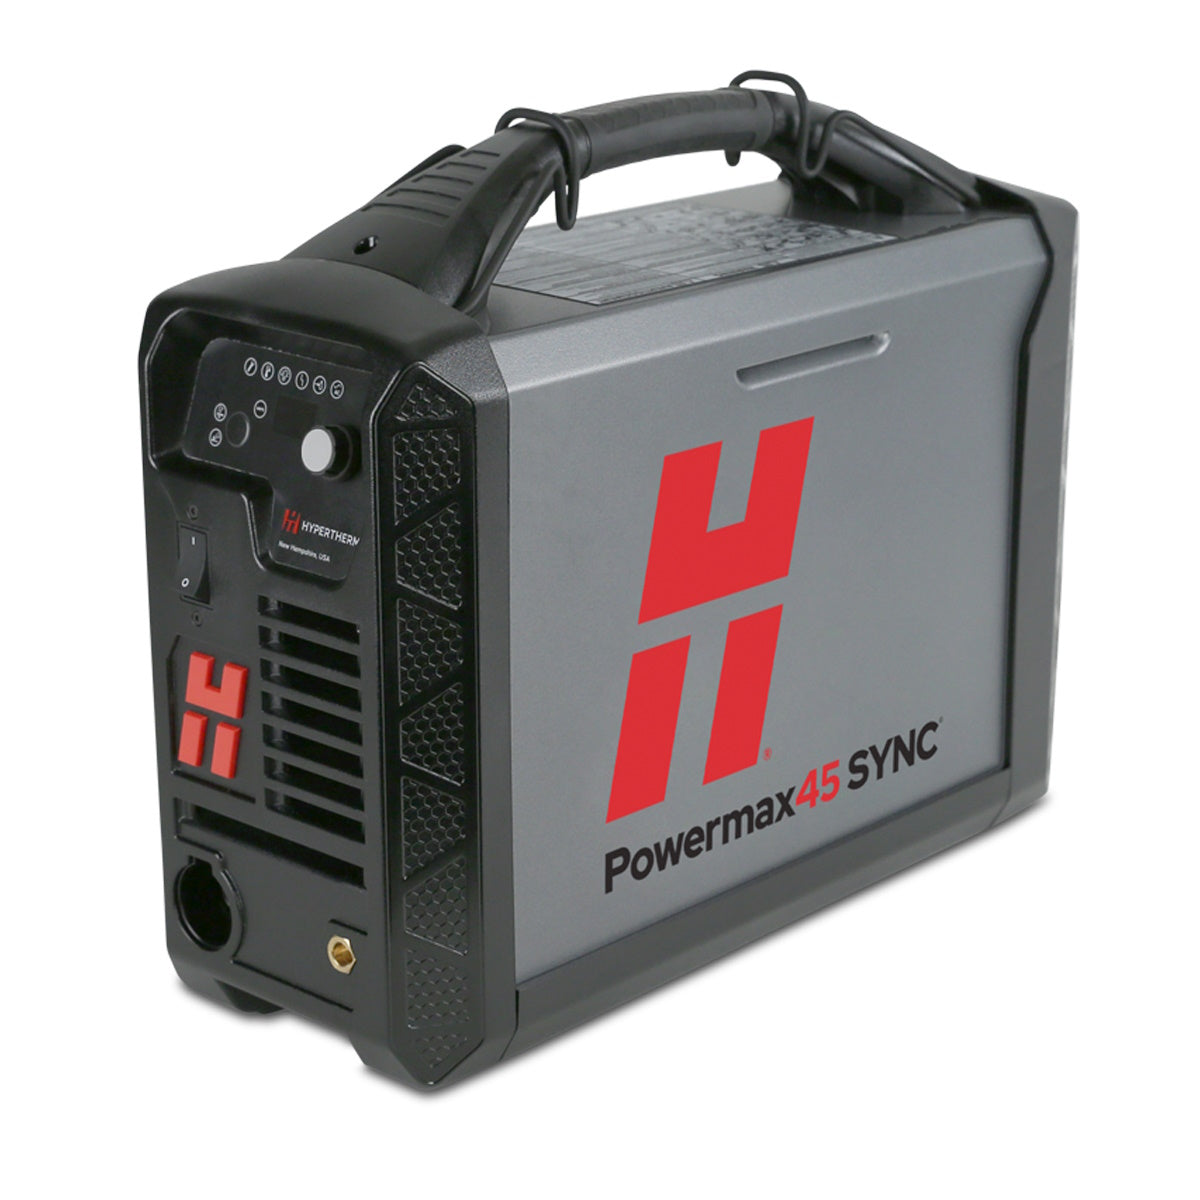 Hypertherm Powermax45 SYNC Plasma Cutter w/CPC 50ft Hand Torch (088563)